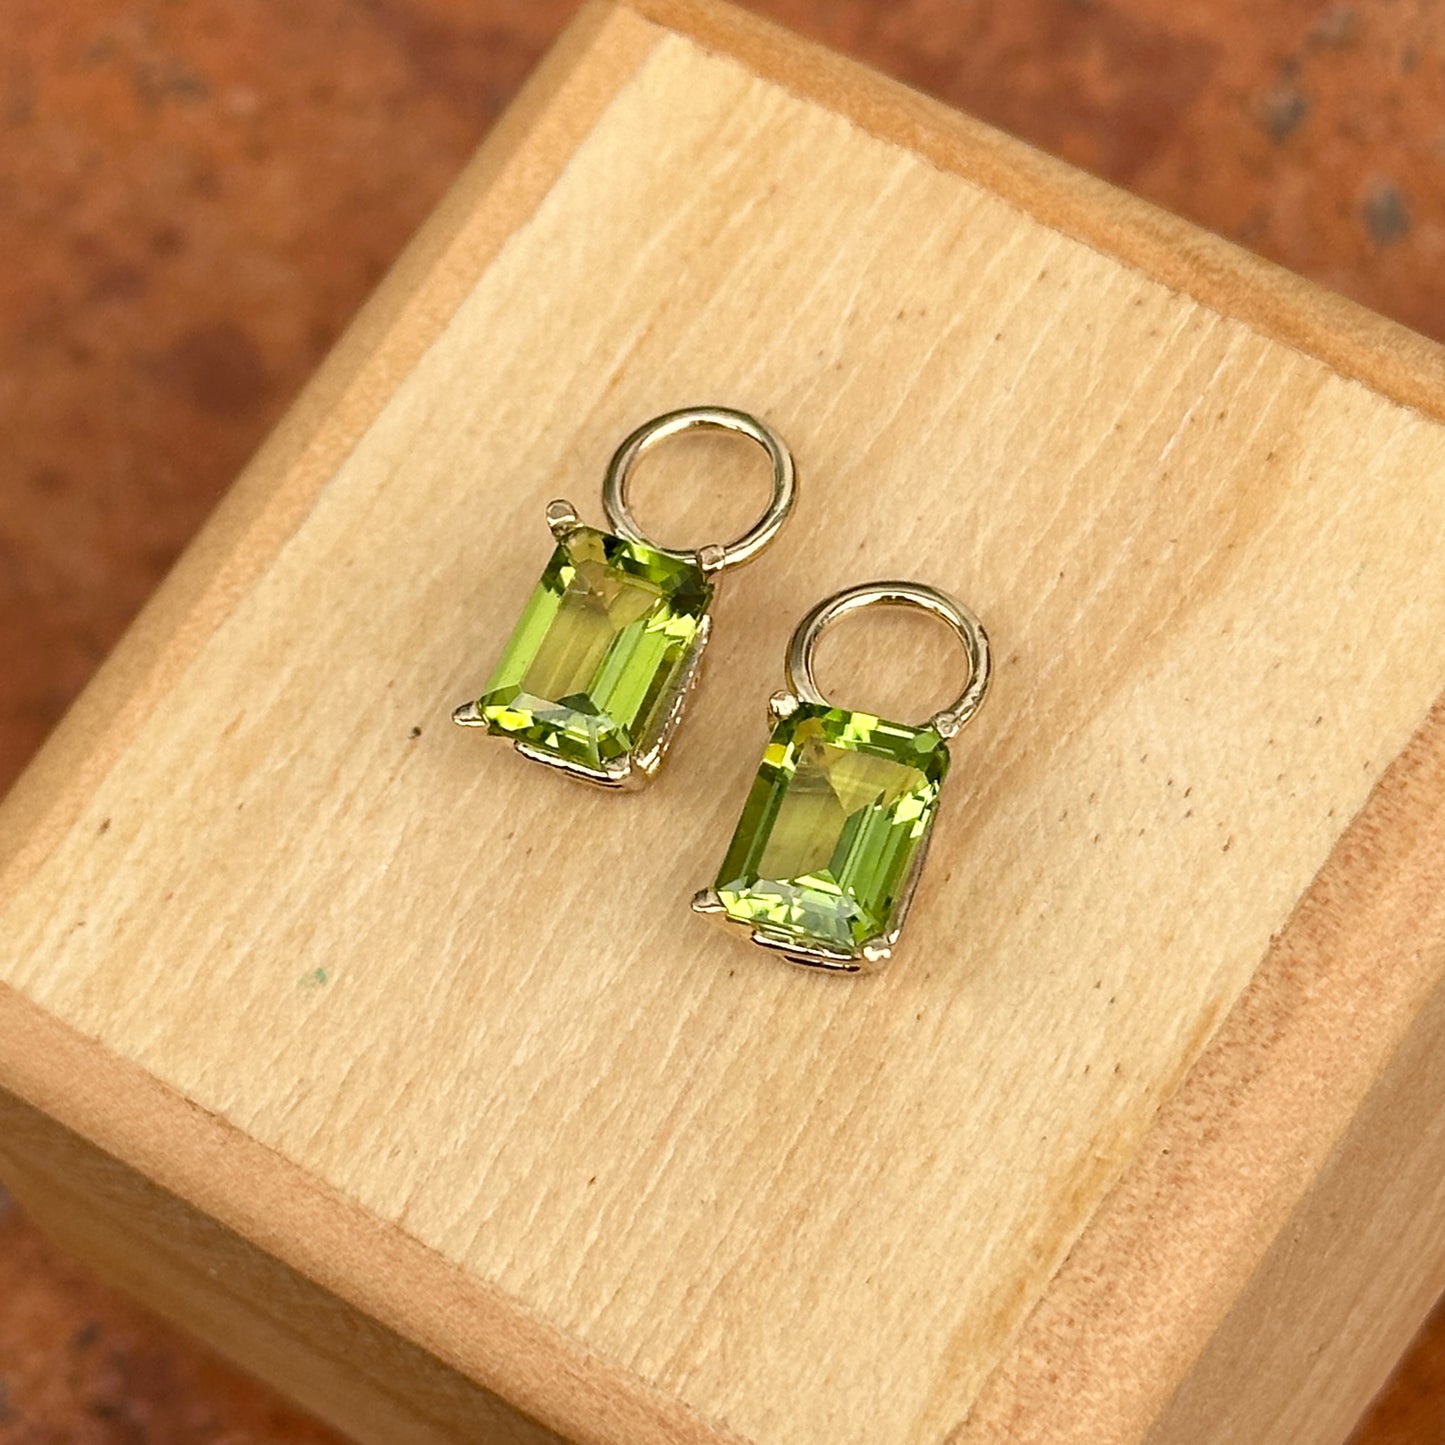 14KT Yellow Gold Emerald-Cut Peridot Earring Charms